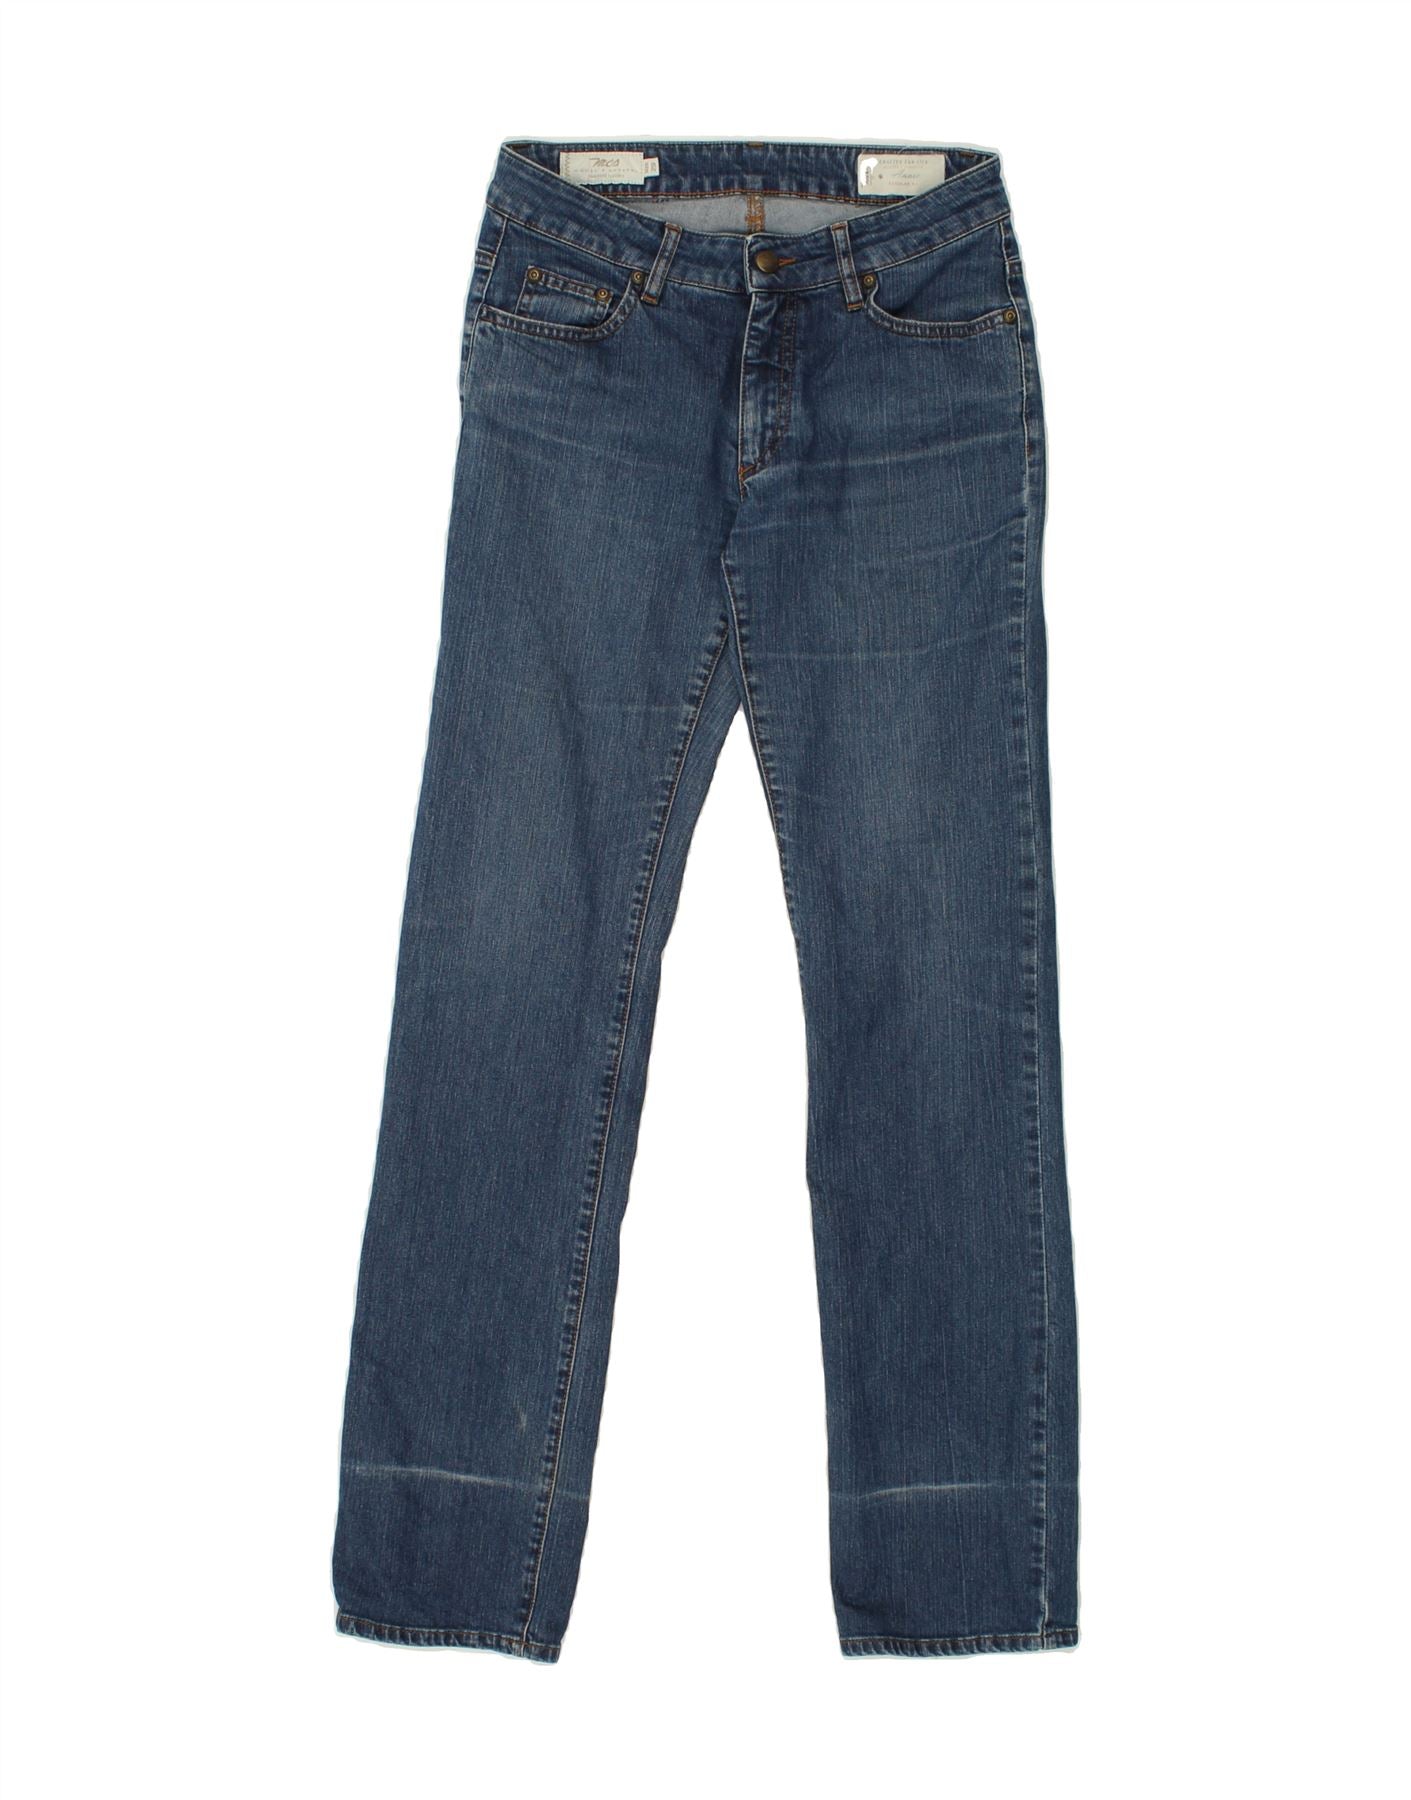 MOSSIMO Womens Mid Rise Legging Jeans US 6 Medium W30 L30 Blue